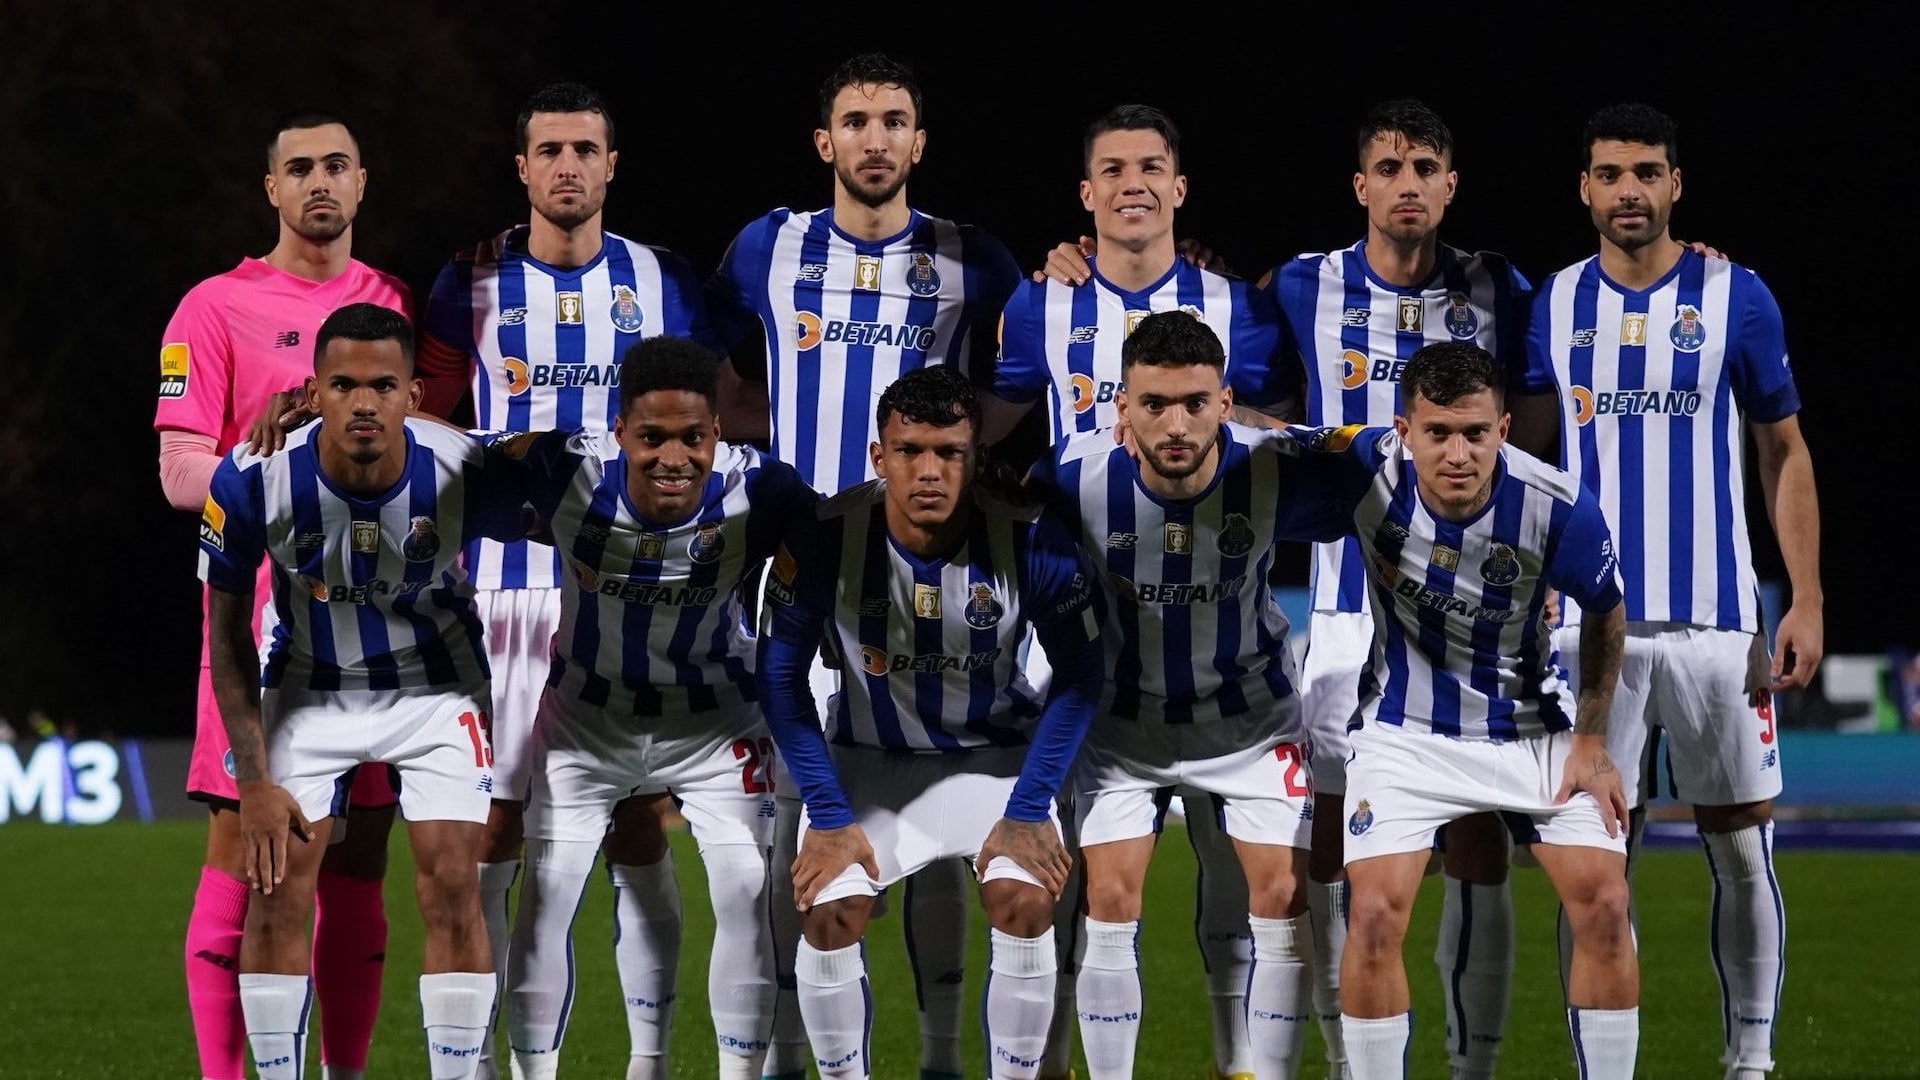 FC Porto - ⏱Final de Jogo / End of the match / Final del